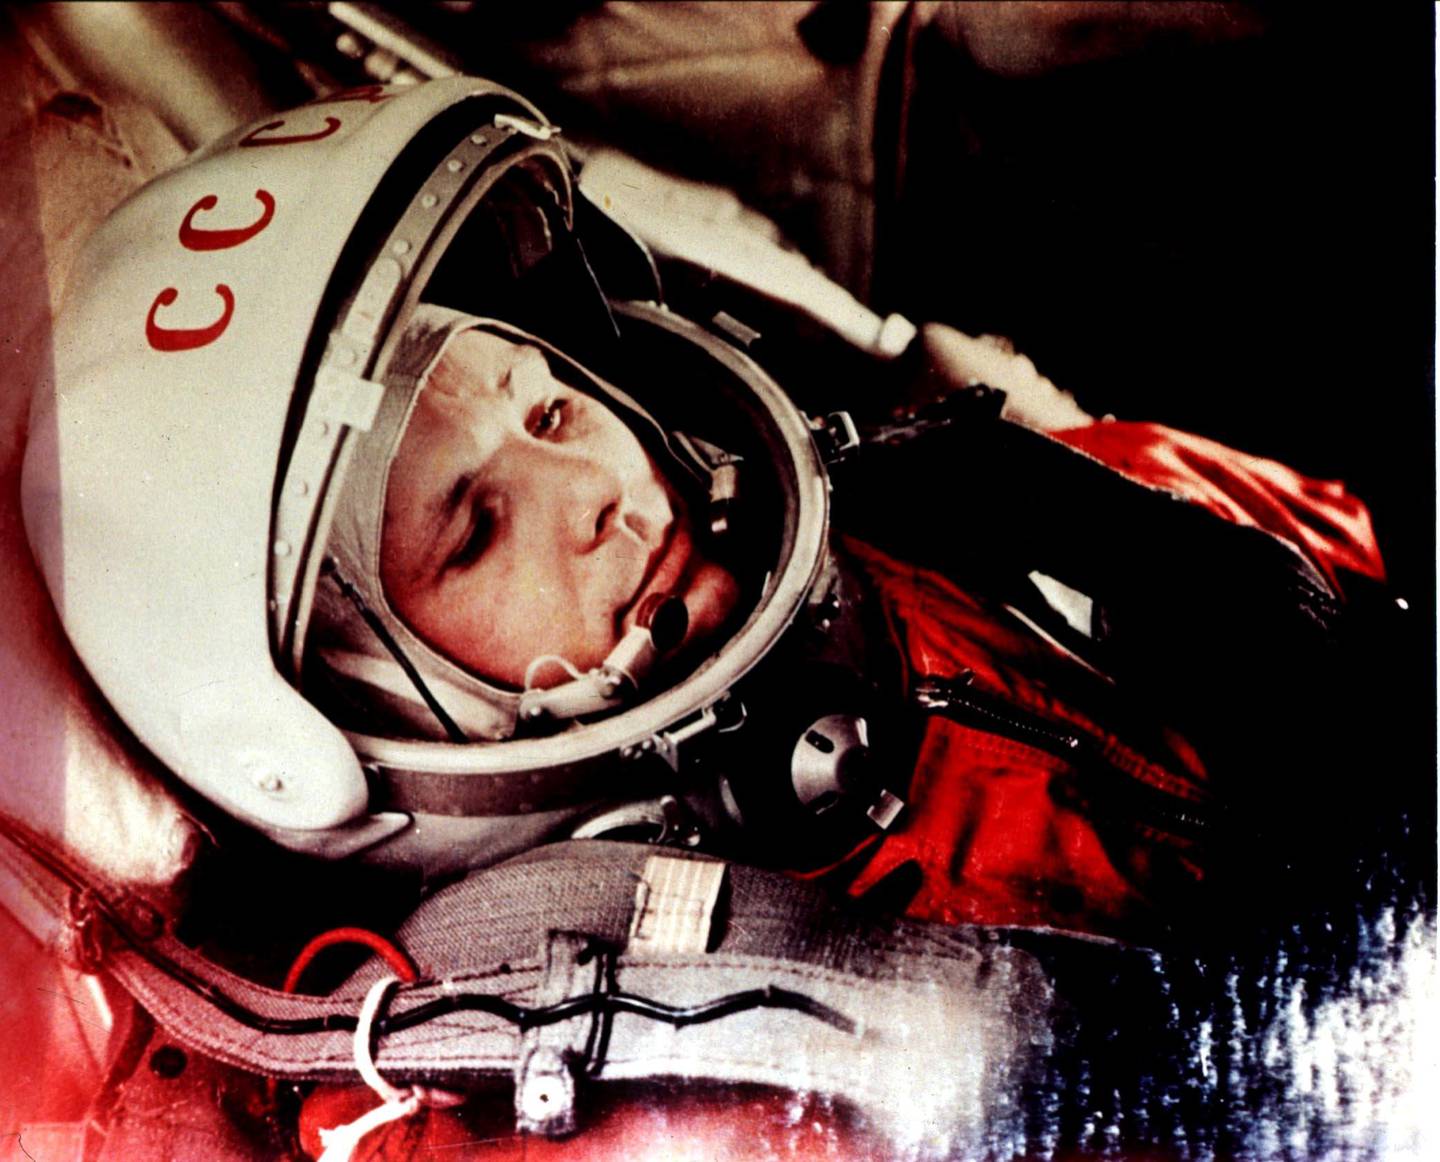 Arkiv: Jurij Gagarin 1934-1968. Første menneske i verdensrommet. Her - i Vostok 1,  12.april 1961.
Foto: NOVOSTI